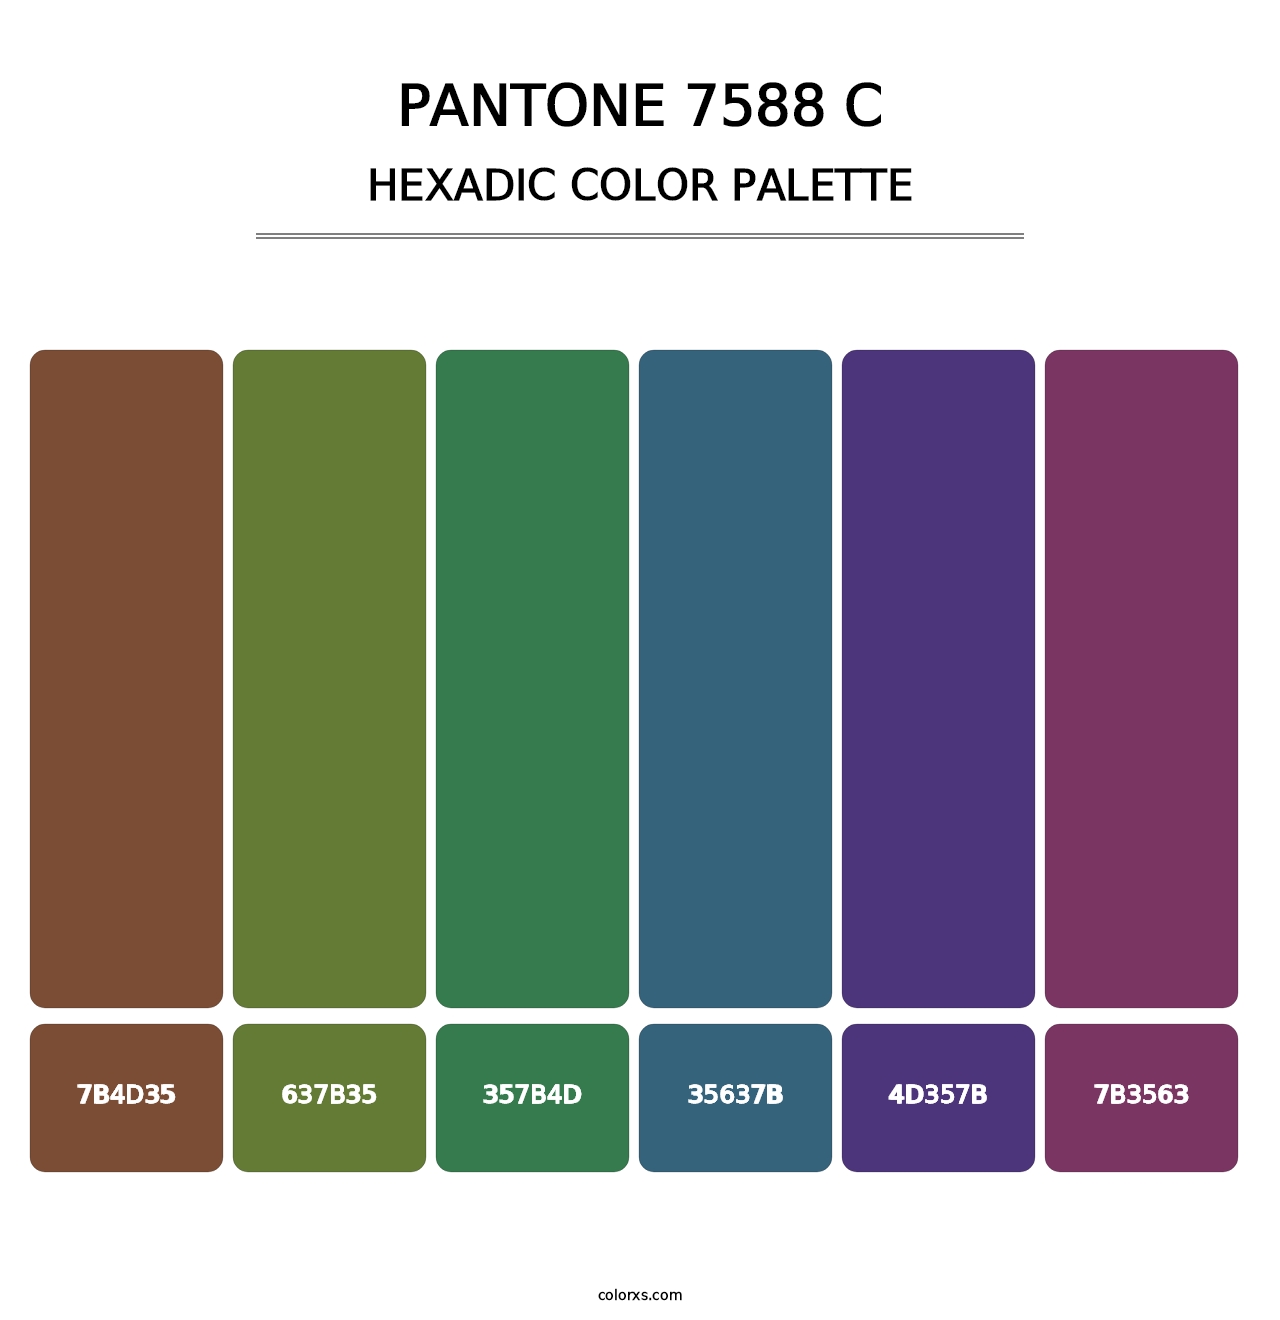 PANTONE 7588 C - Hexadic Color Palette